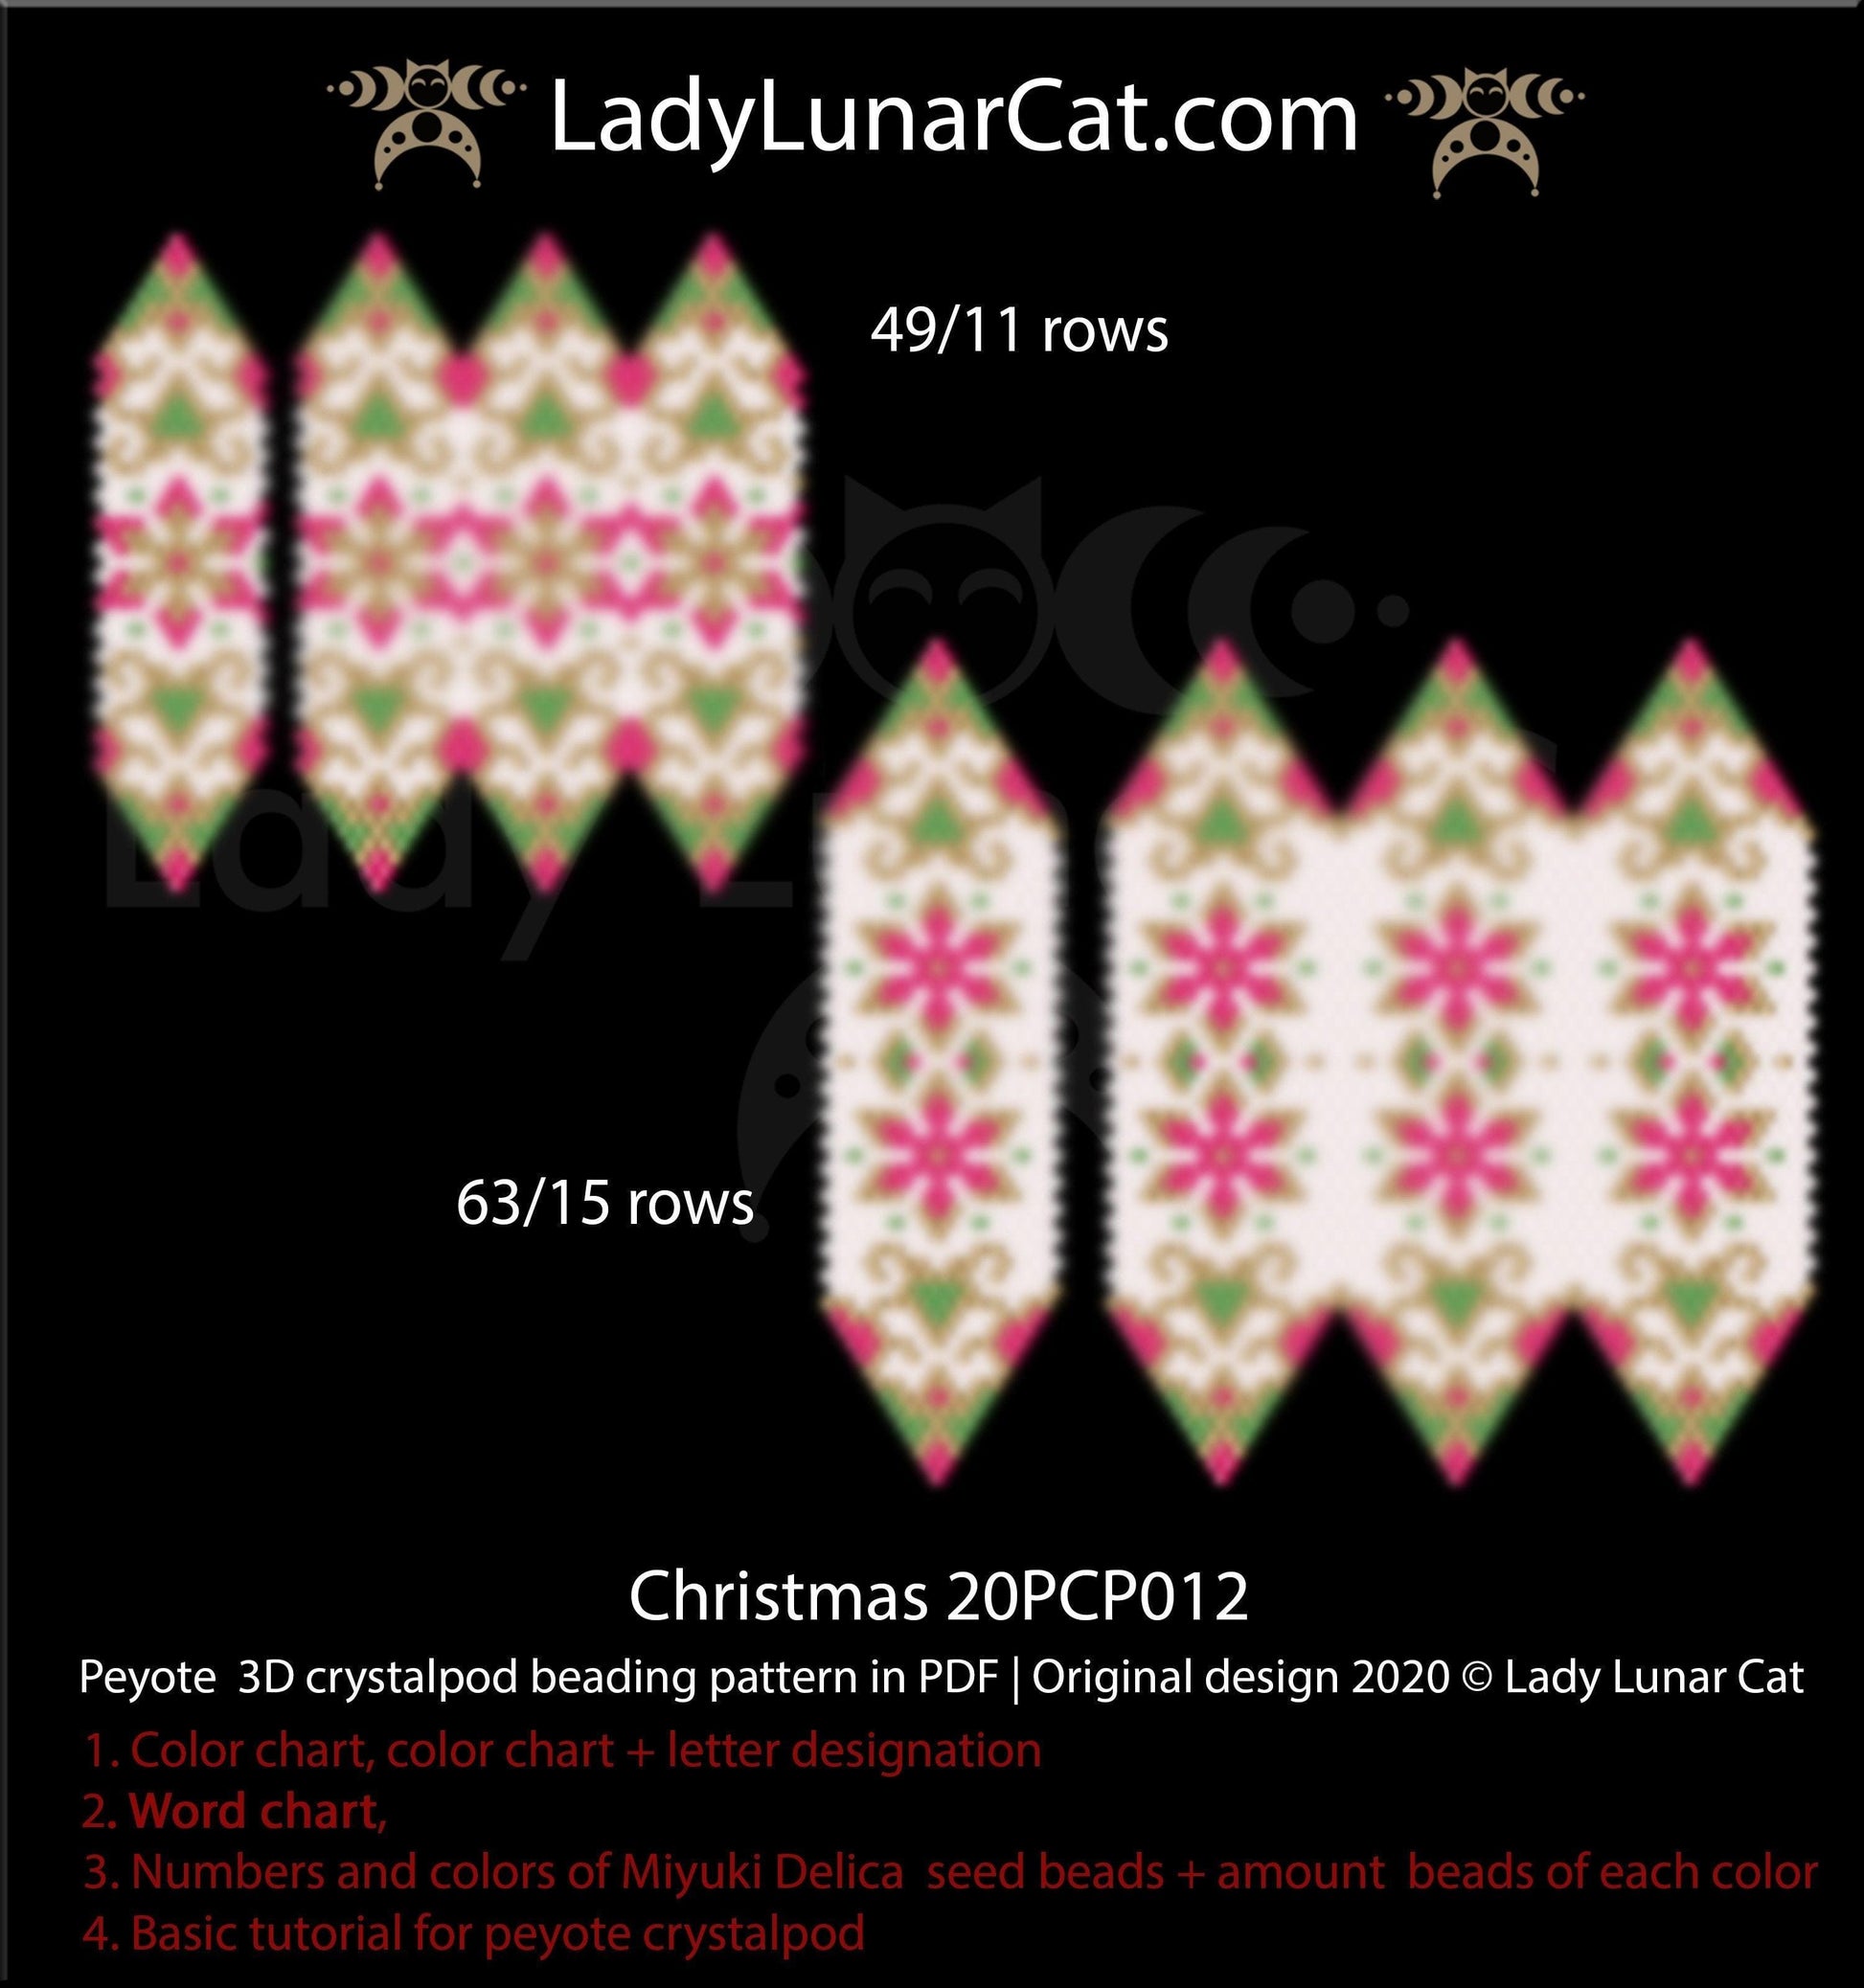 3d peyote pod pattern or crystalpod pattern for beading Christmas 20PCP012 LadyLunarCat